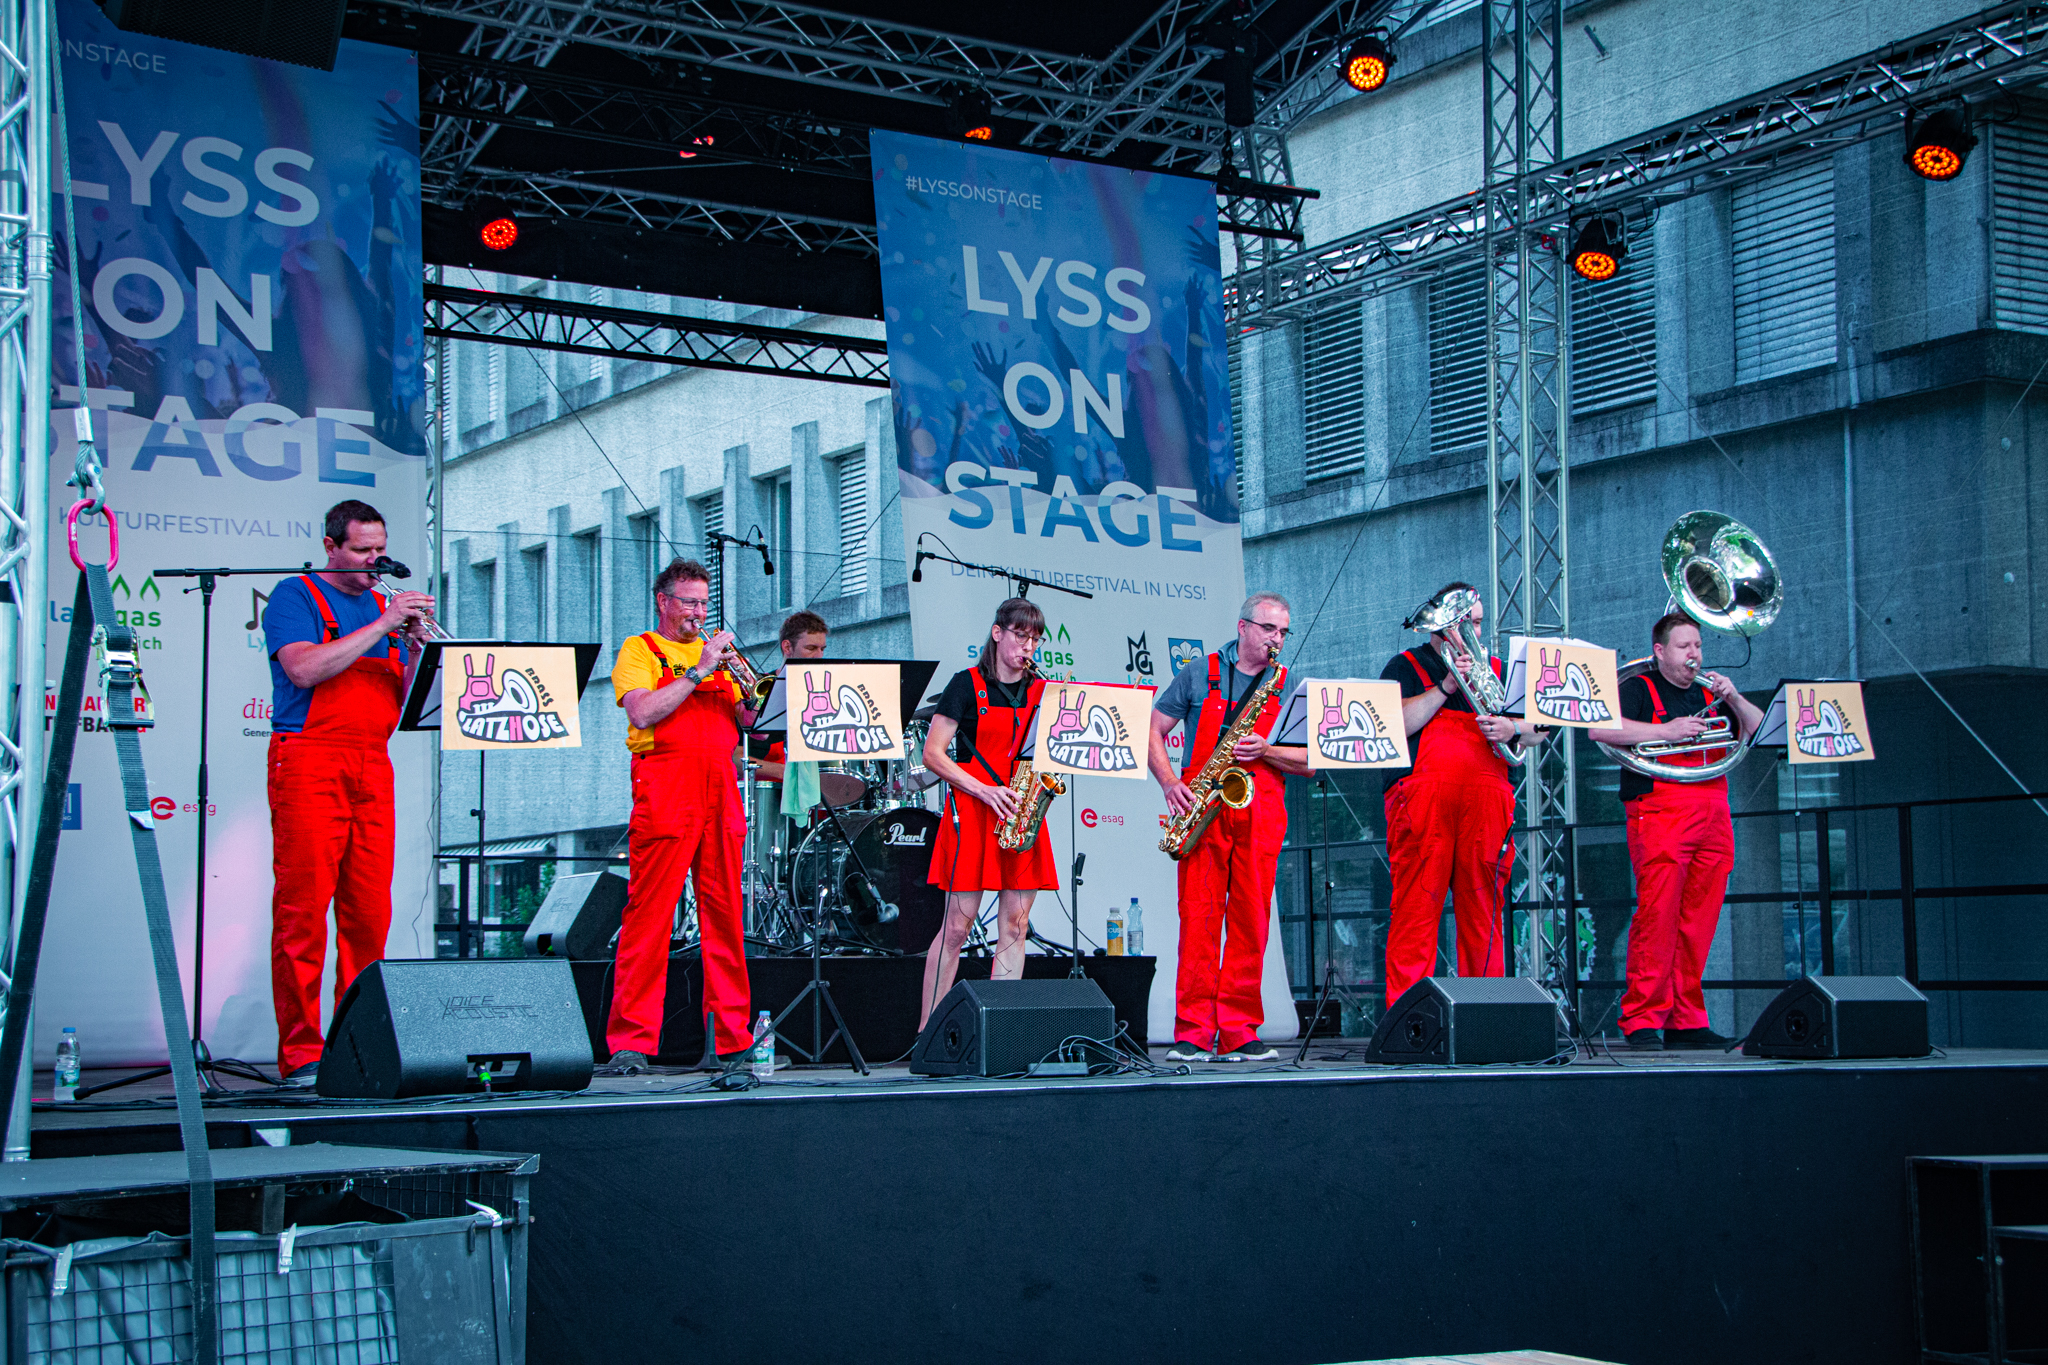 podning Rykke Ved Lyss on Stage - Dein Kulturfestival in Lyss!